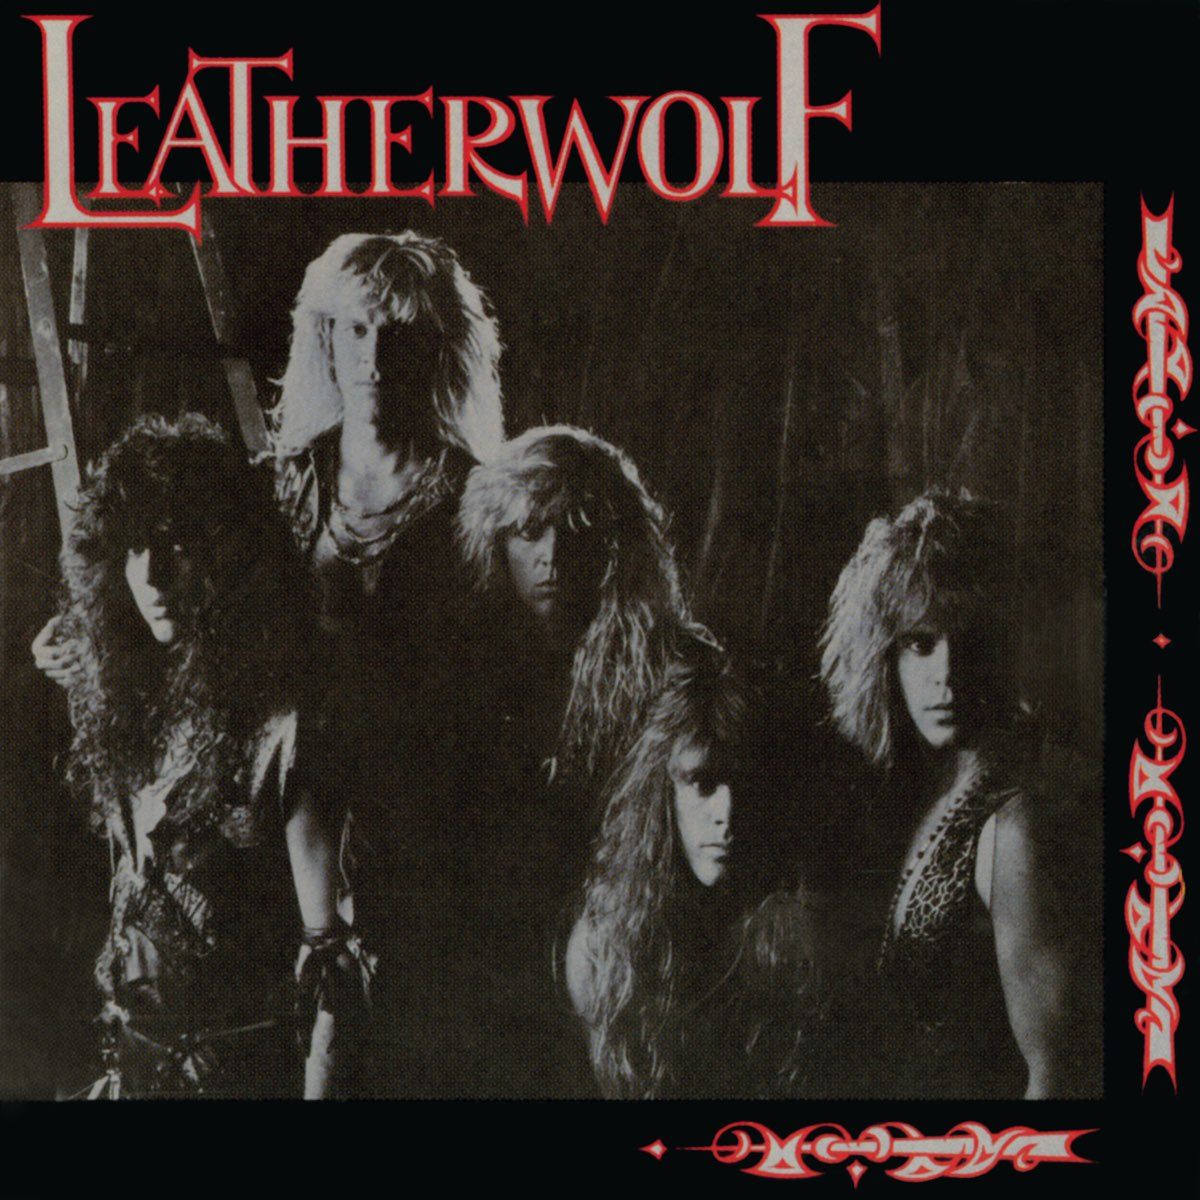 Leatherwolf - Leatherwolf 1987